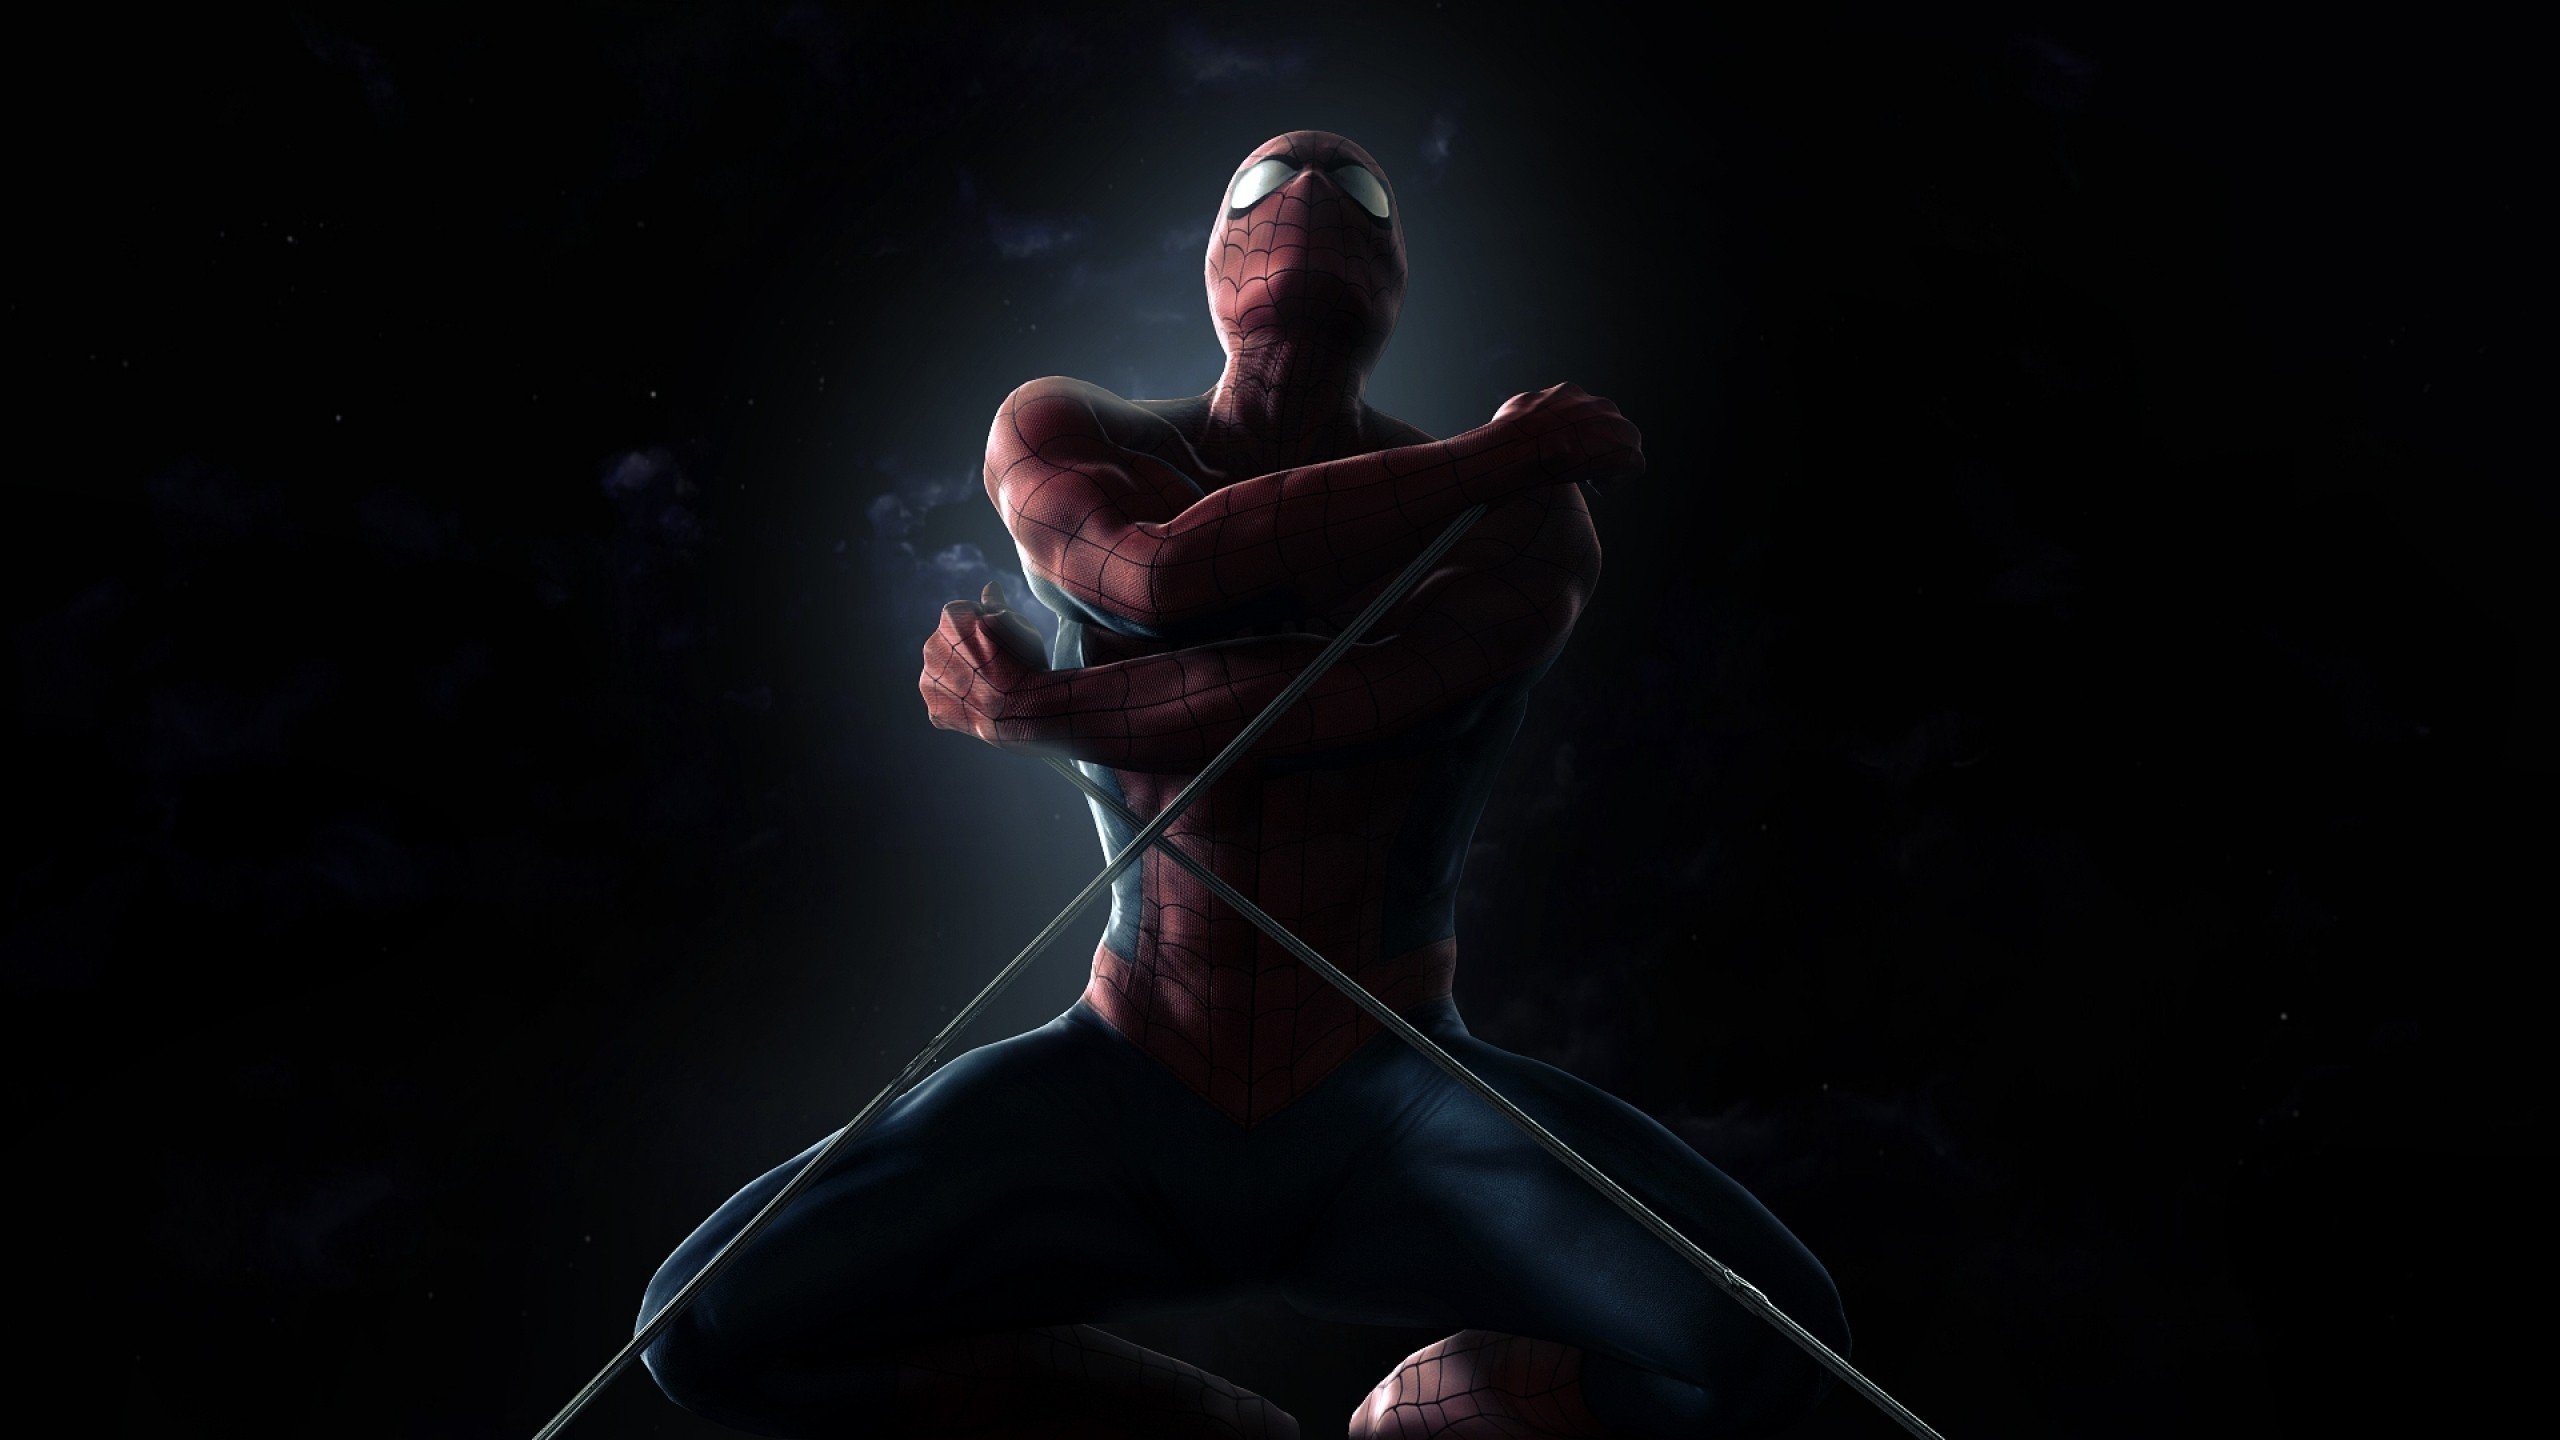 Dark Spider Man Smoke Superheroes Muscles Marvel Ics Black